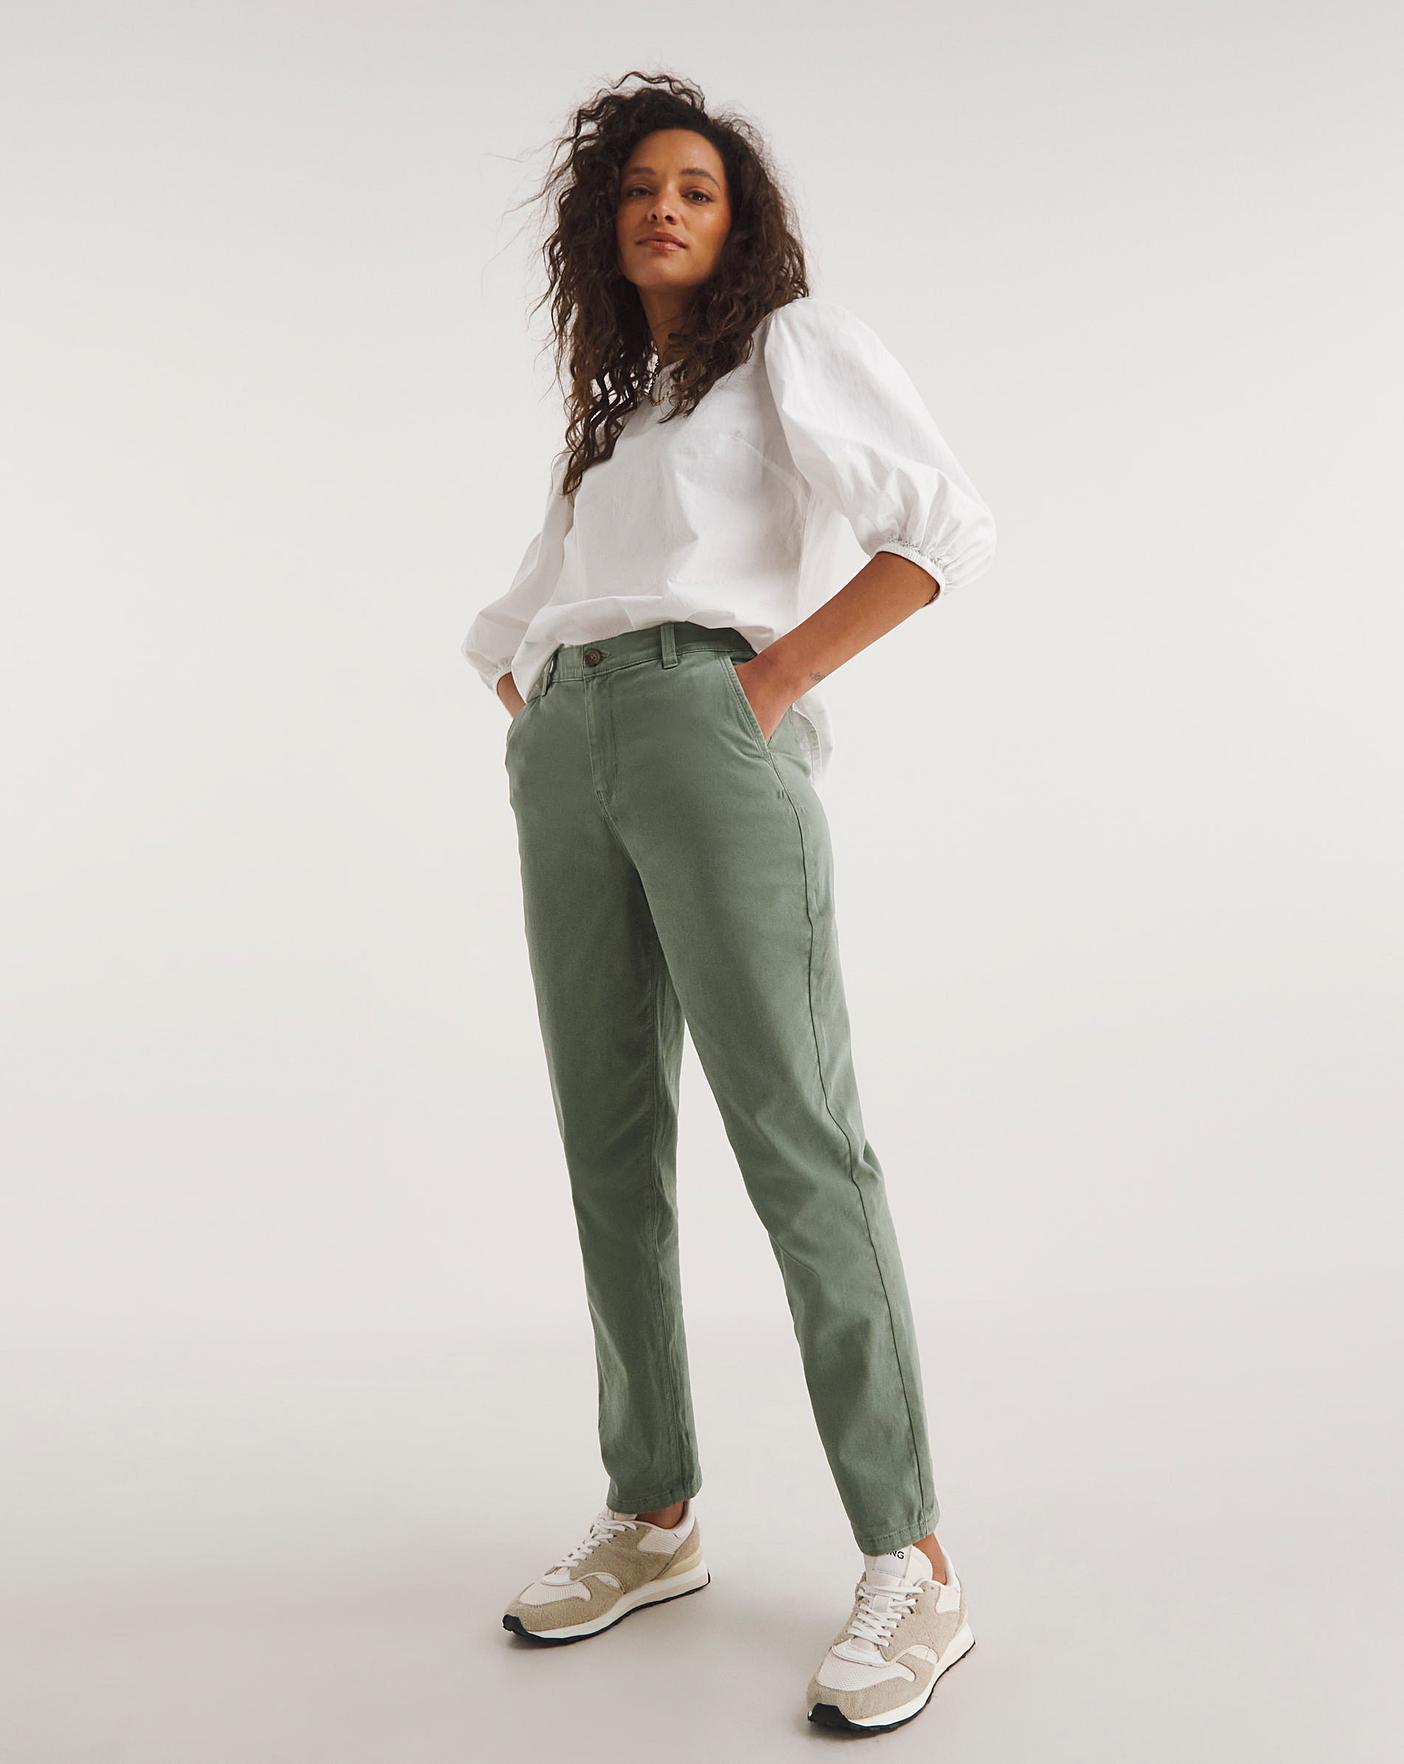 Buy COLOR PLUS Khaki Mens Regular Fit 5 Pocket Solid Trousers | Shoppers  Stop